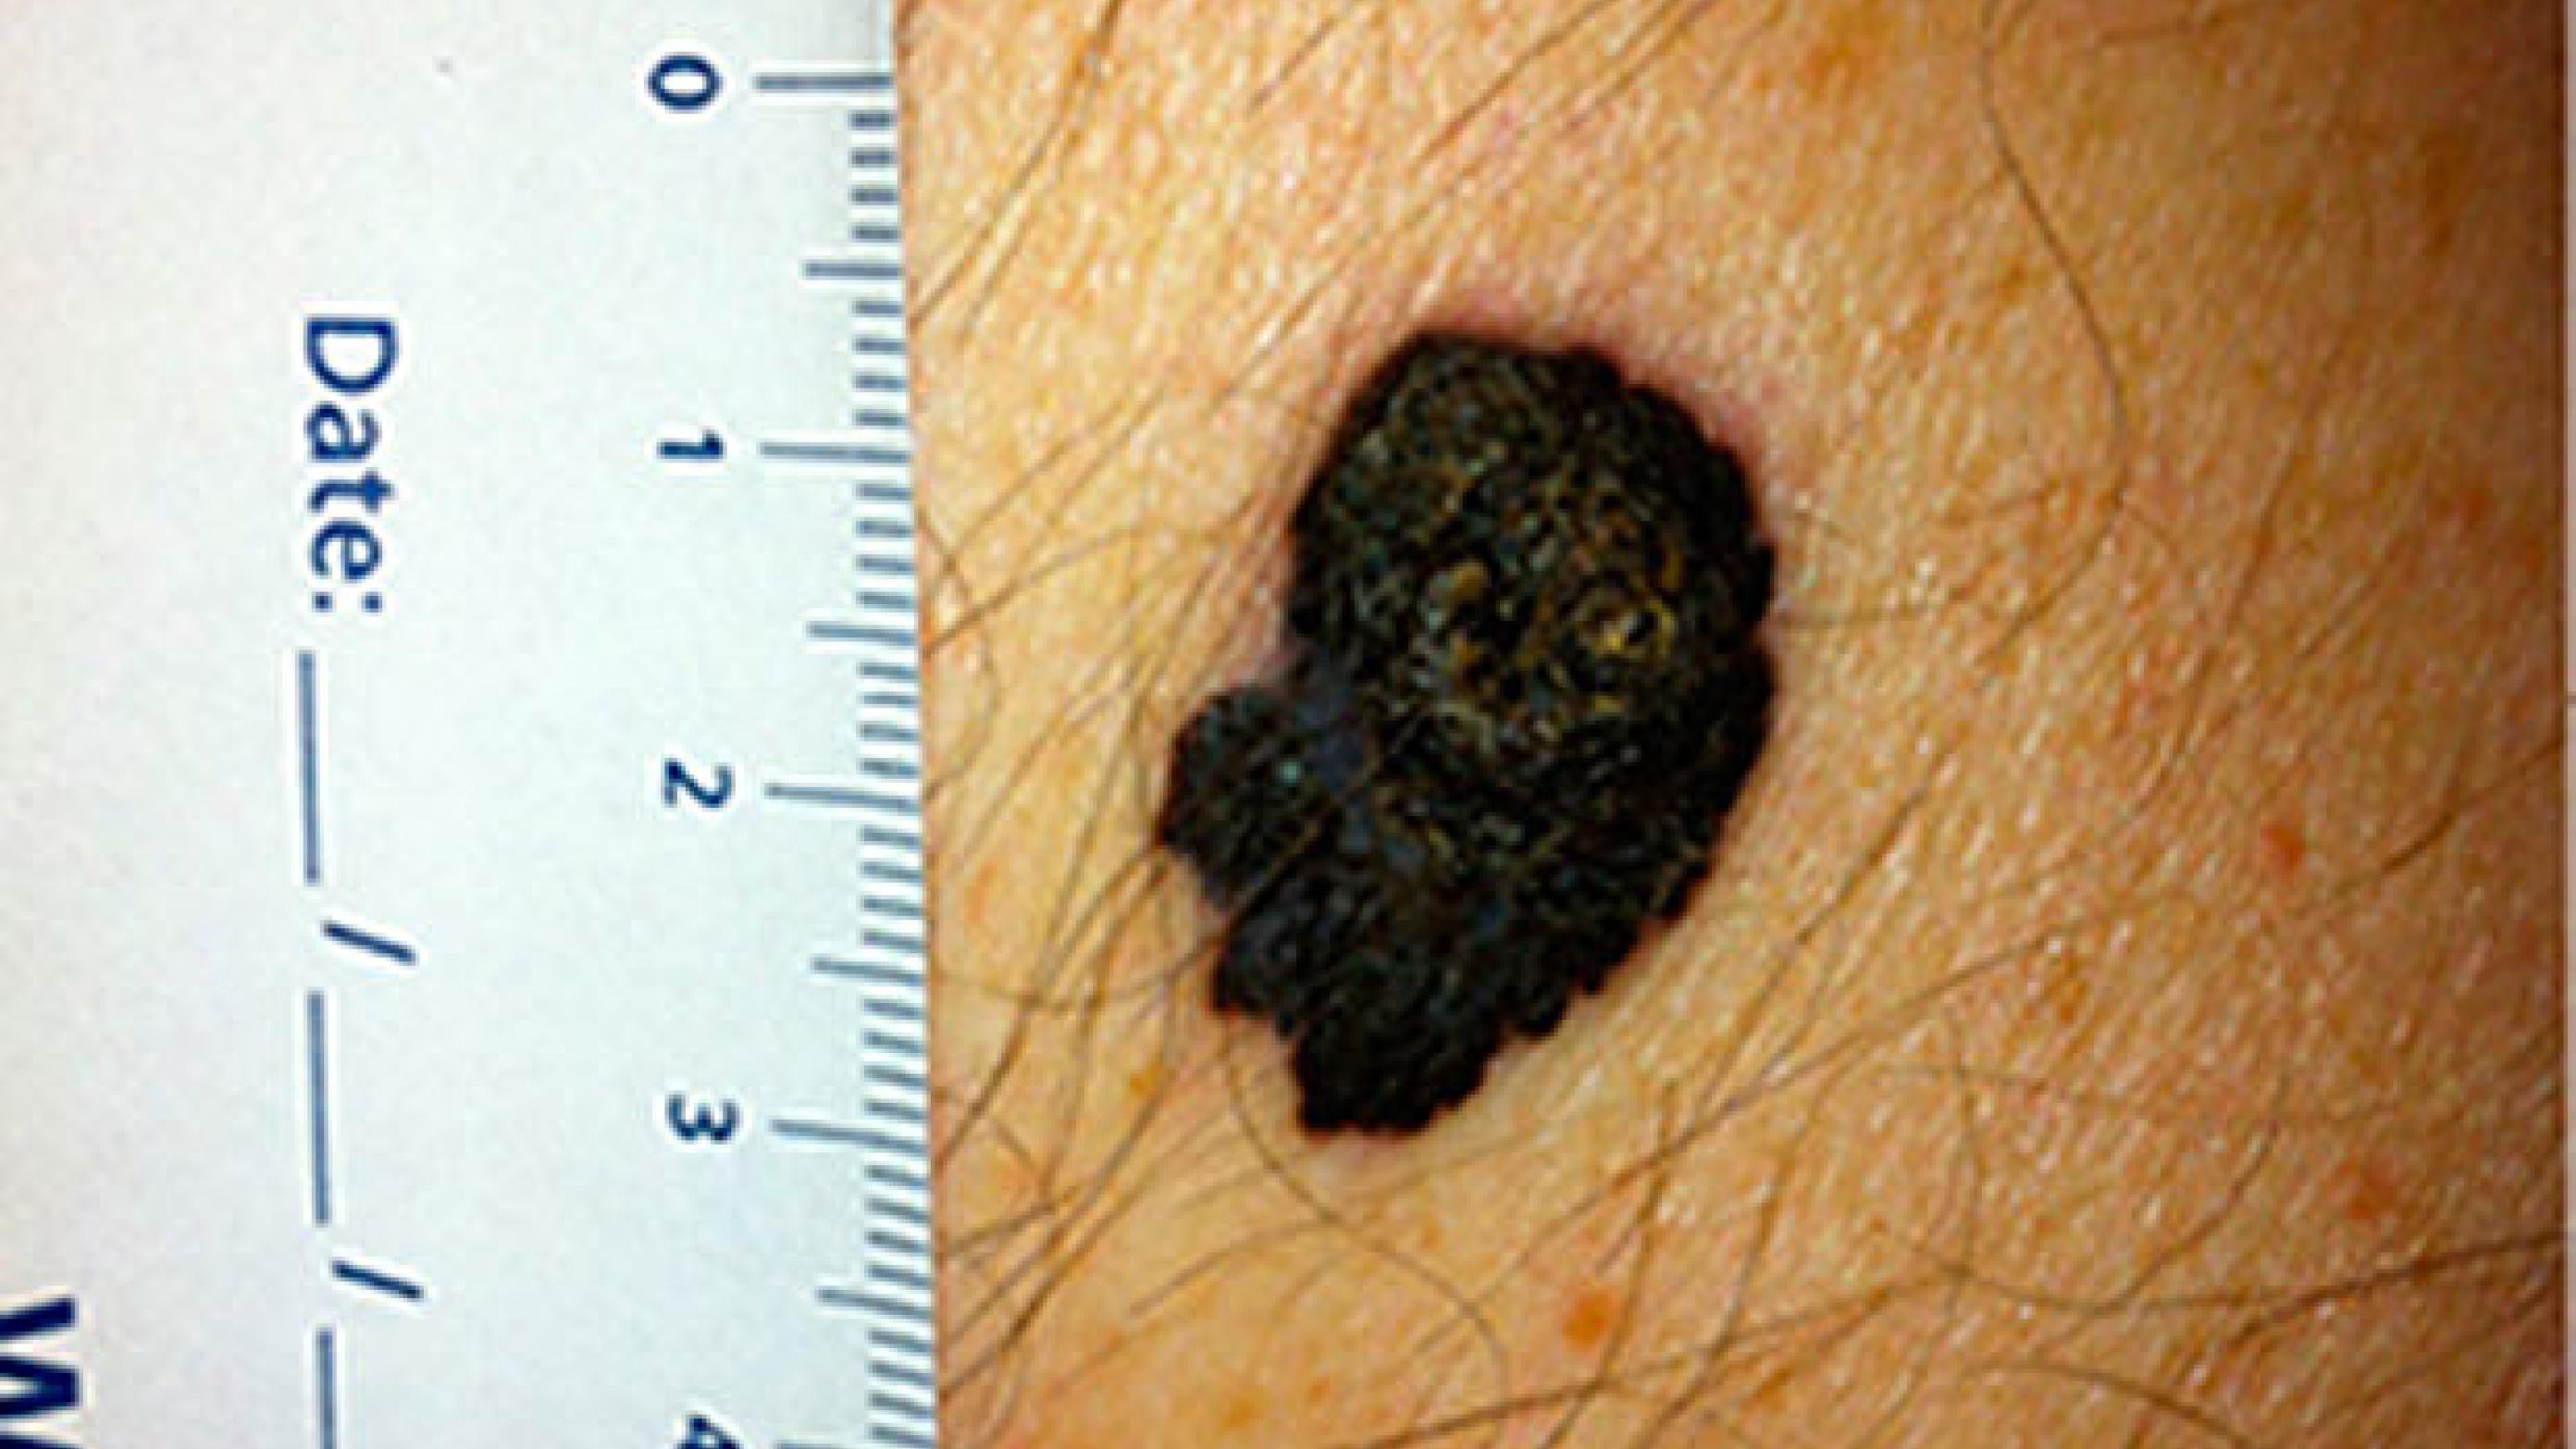 Et superficielt spredende melanom. 